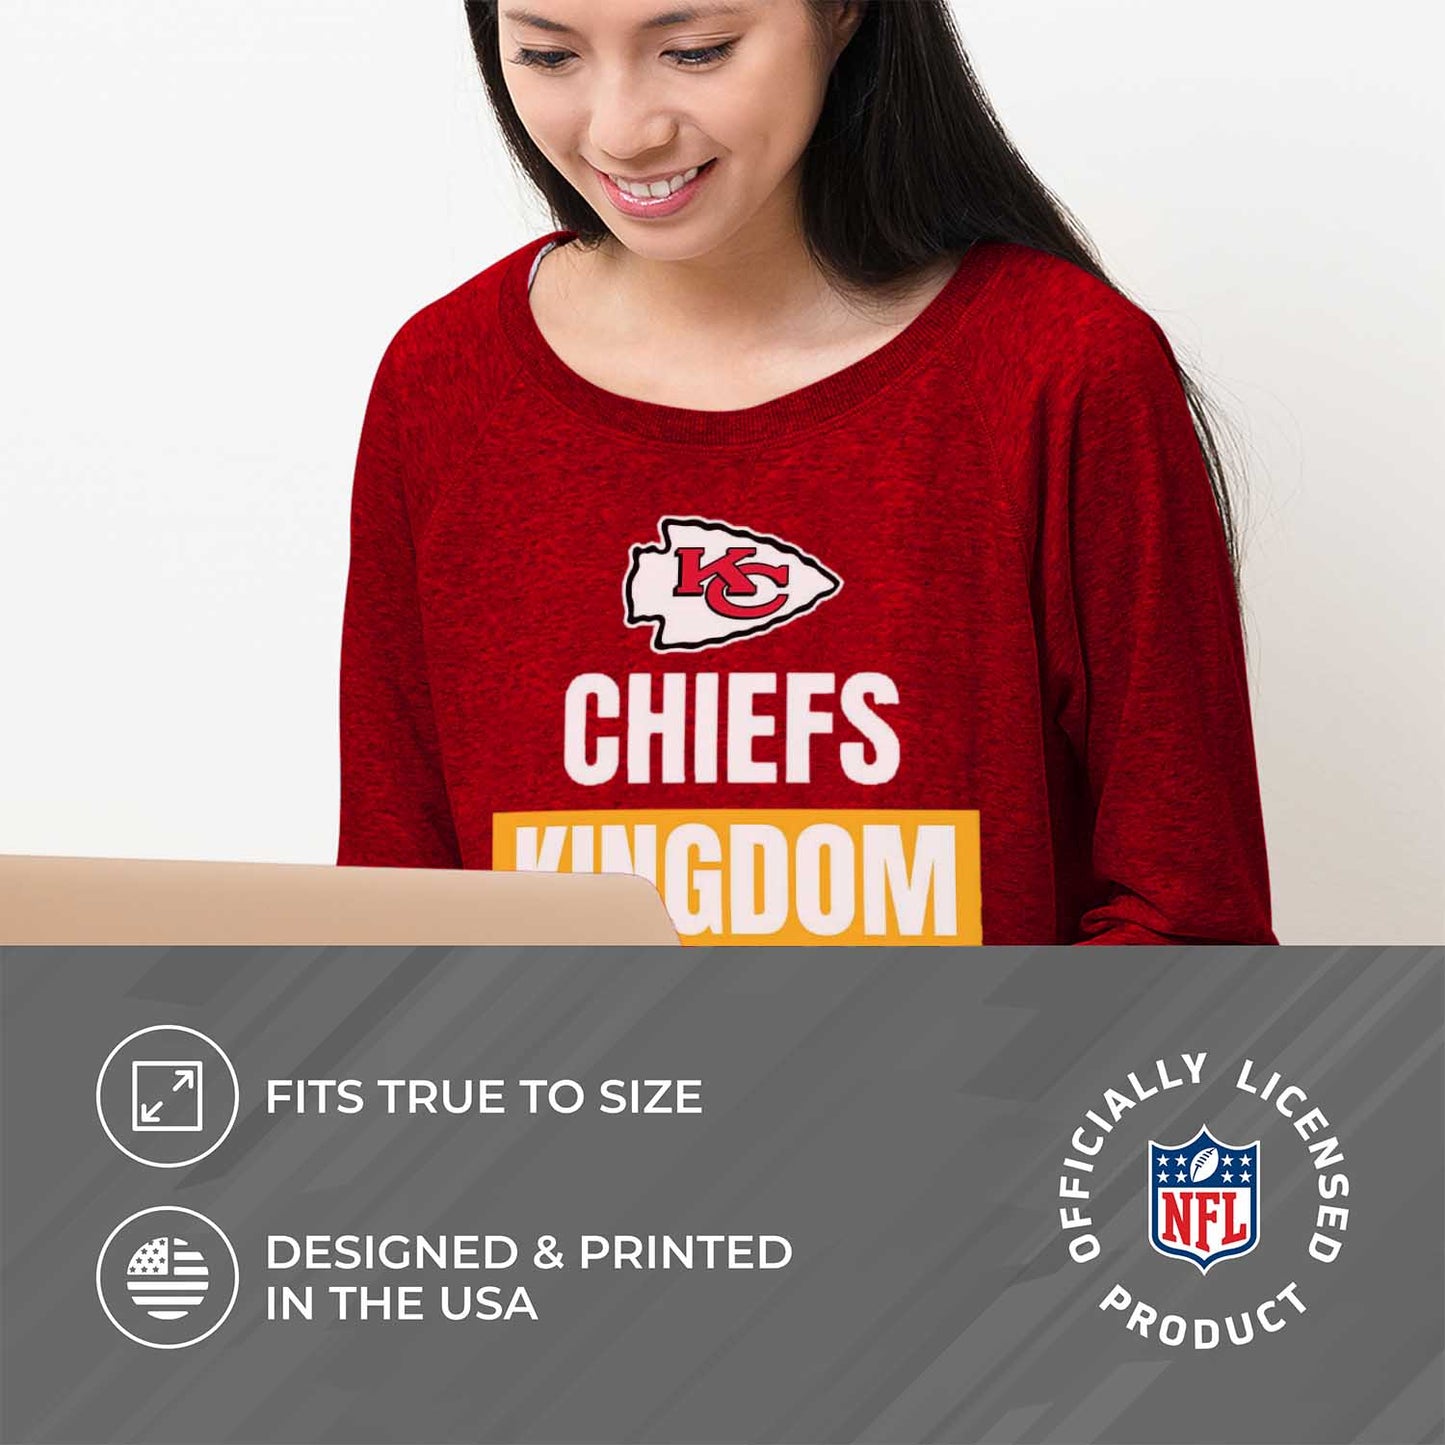 Kansas City Chiefs NFL Womens Plus Size Team Slogan Crew Neck - Red